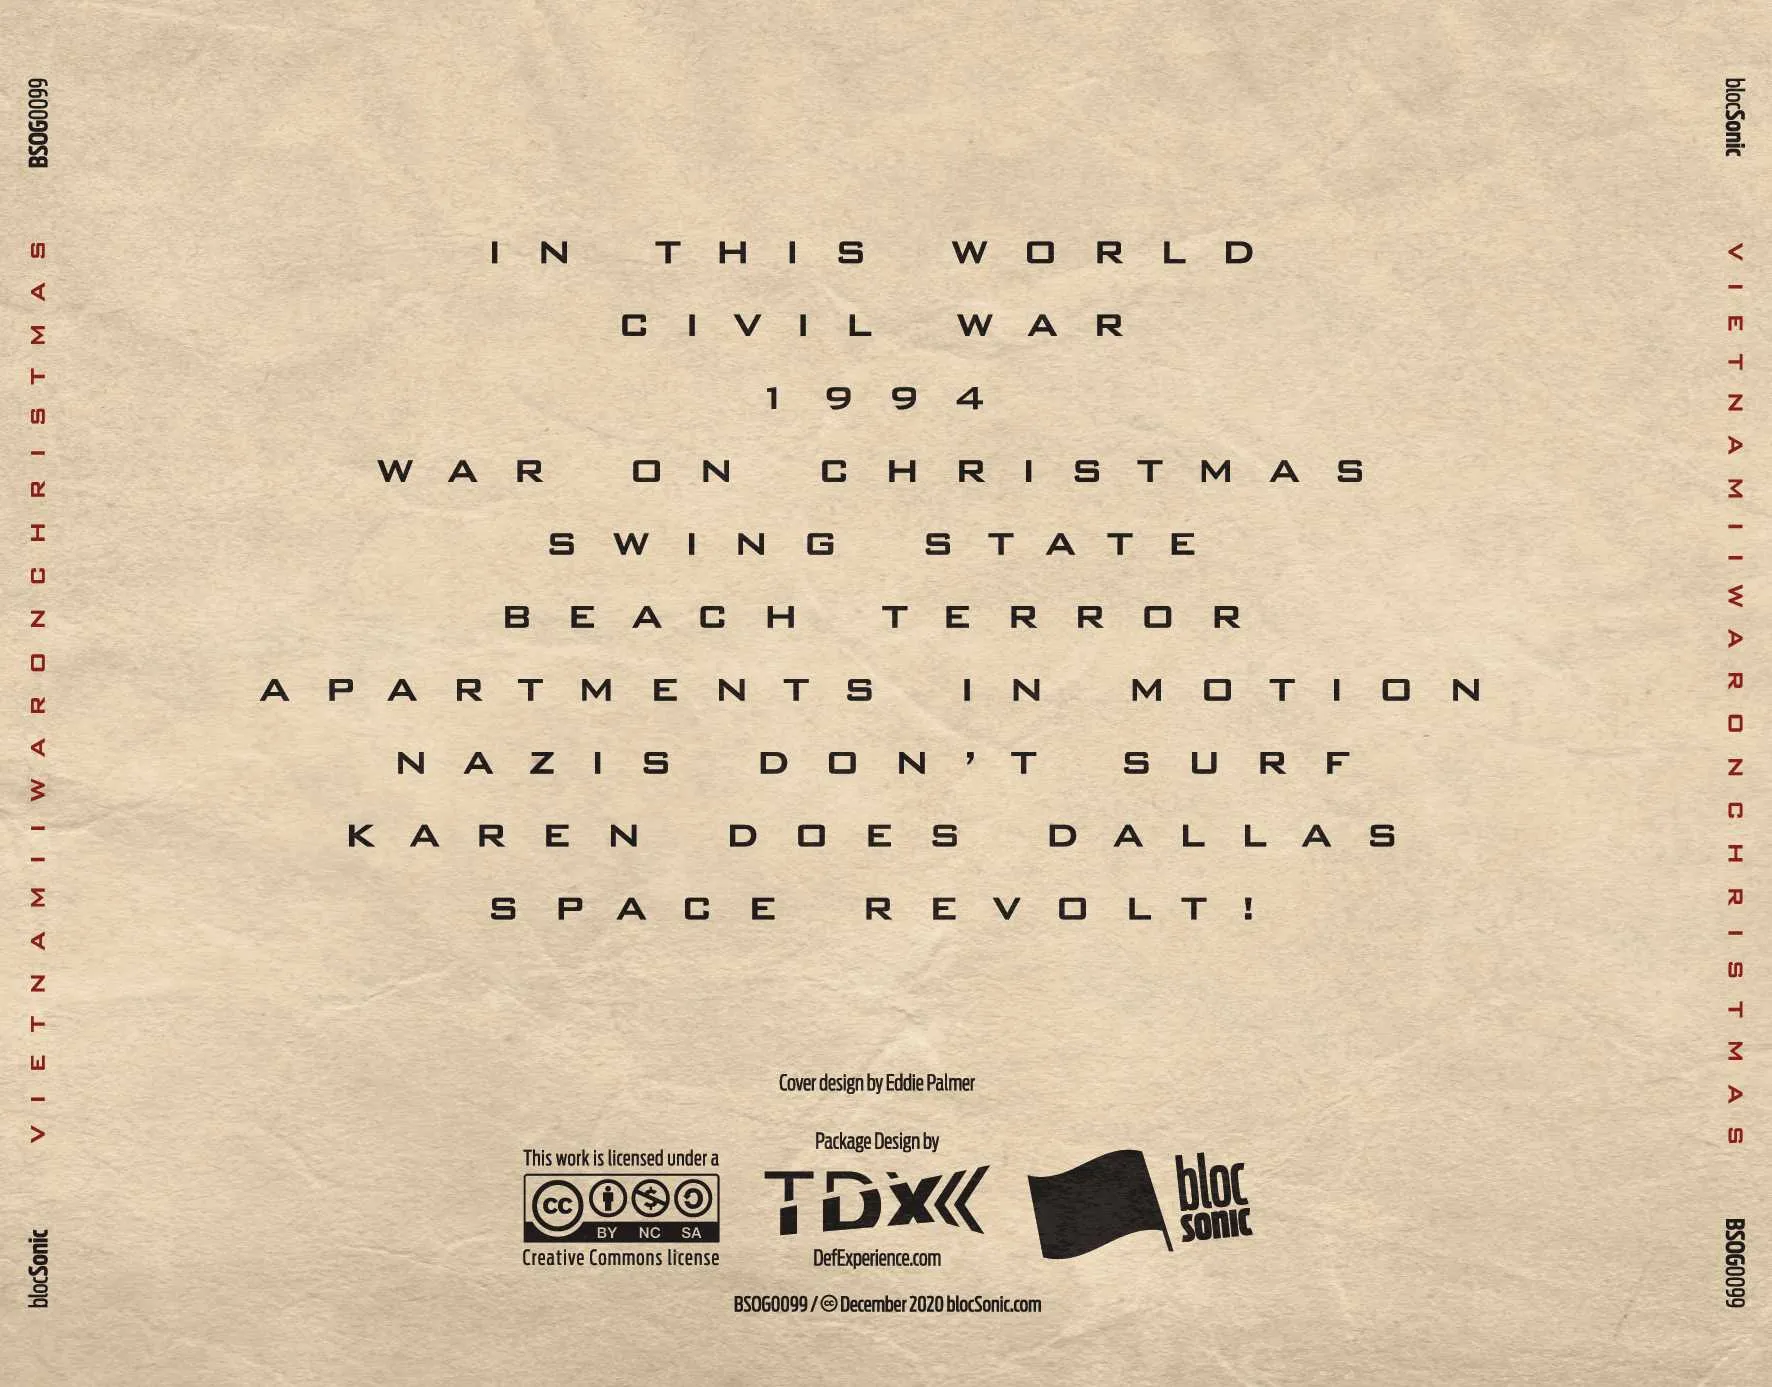 Album traycard for “War on Christmas” by Vietnam II